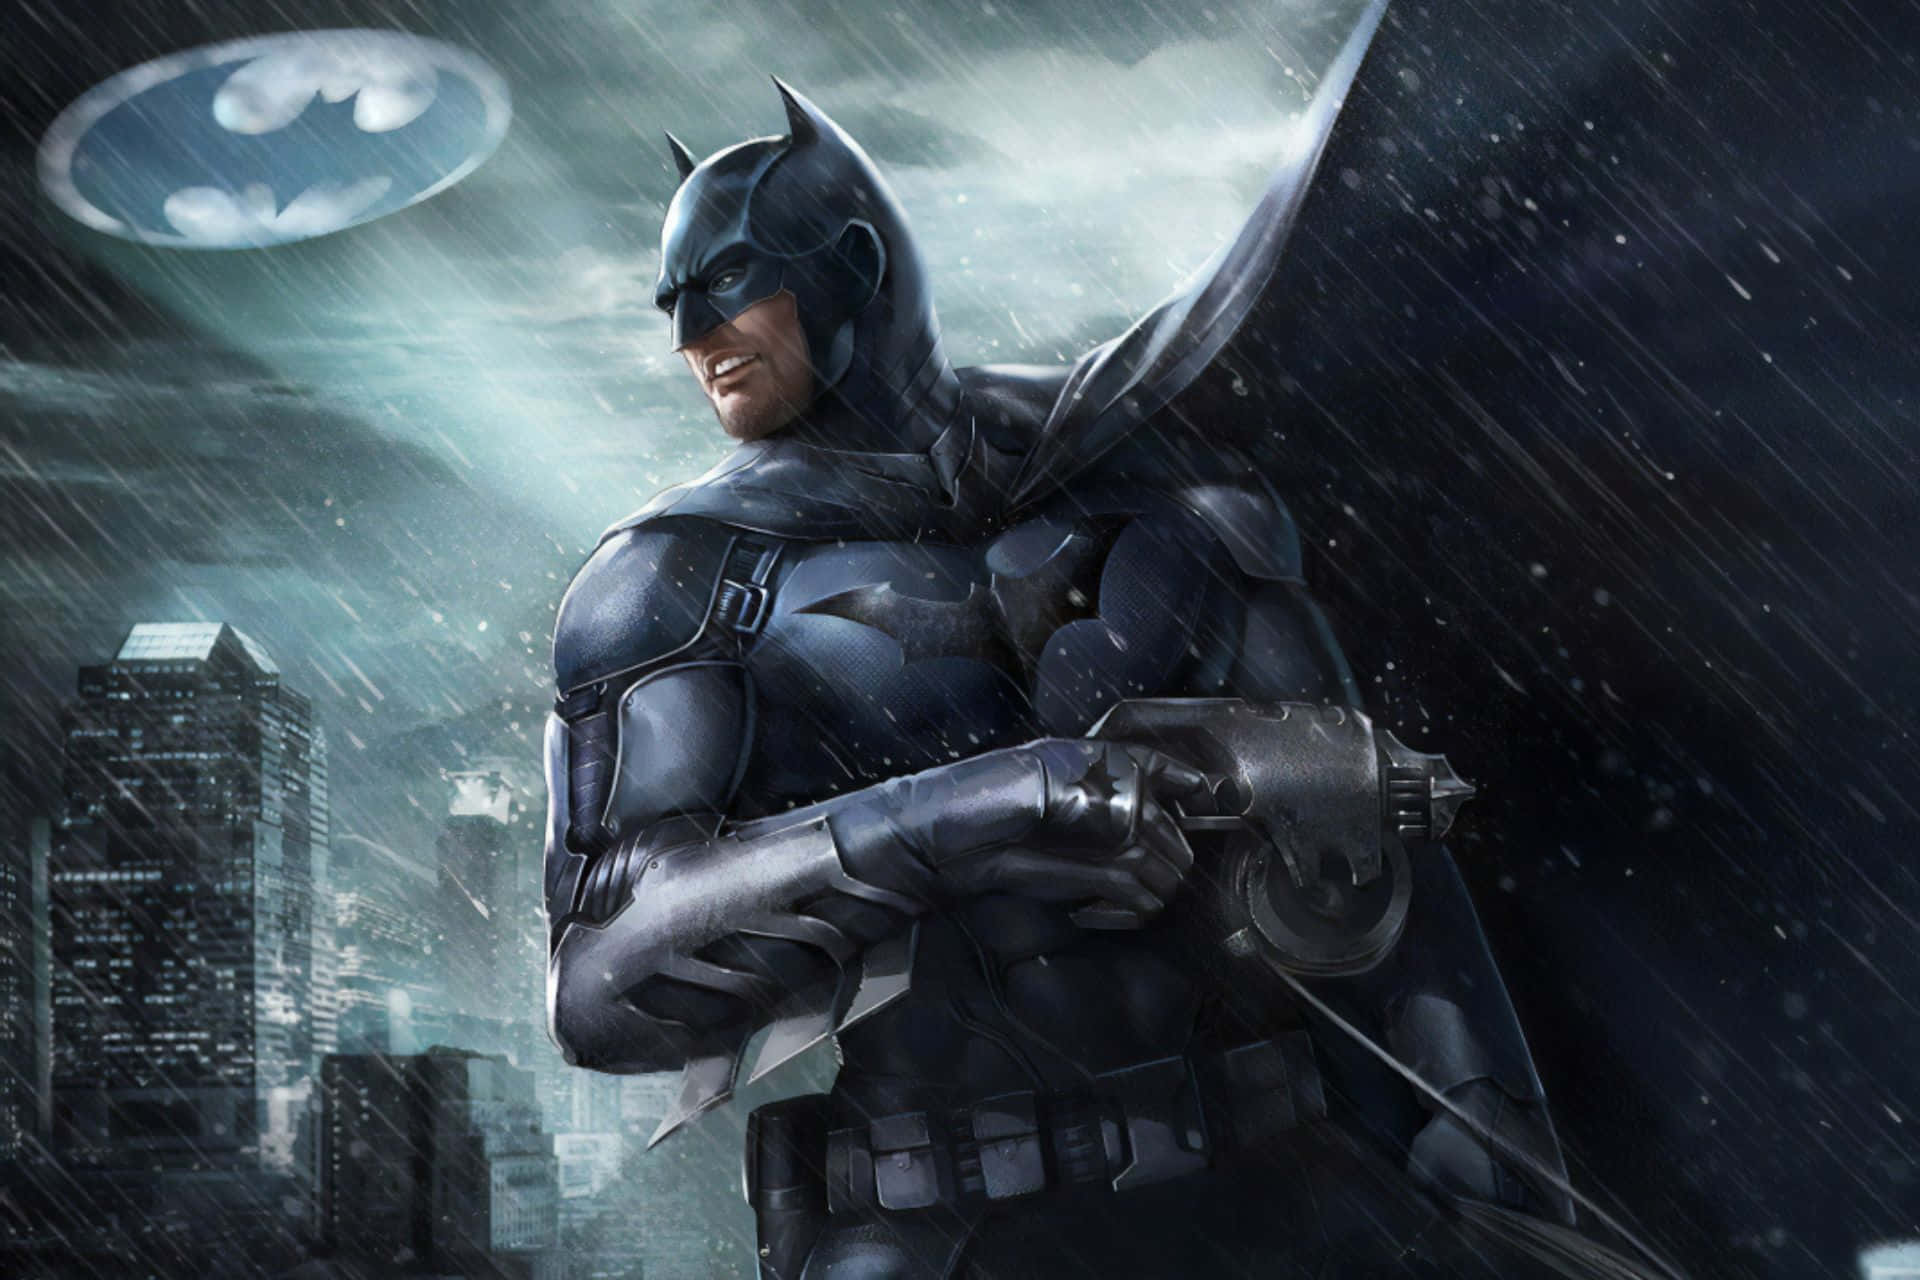 The Bat Signal Lights Up Gotham Sky